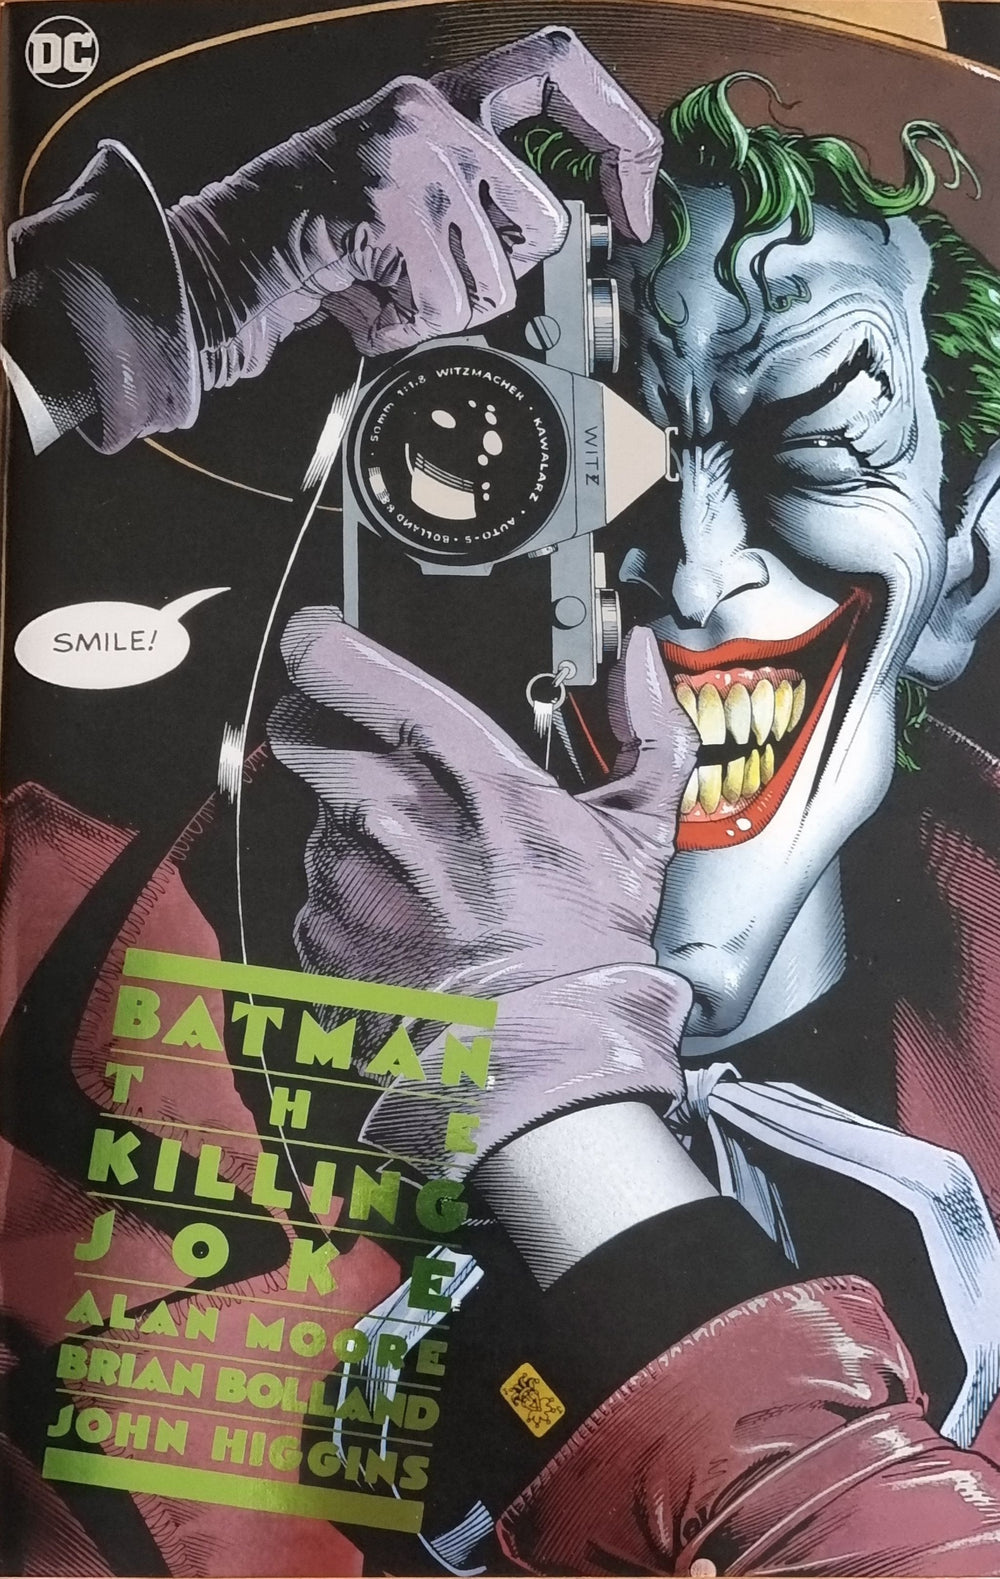 BATMAN : THE KILLING JOKE #1 Brian Bolland MEXICAN FOIL Exclusive! (Ltd to ONLY 1000 Copies)